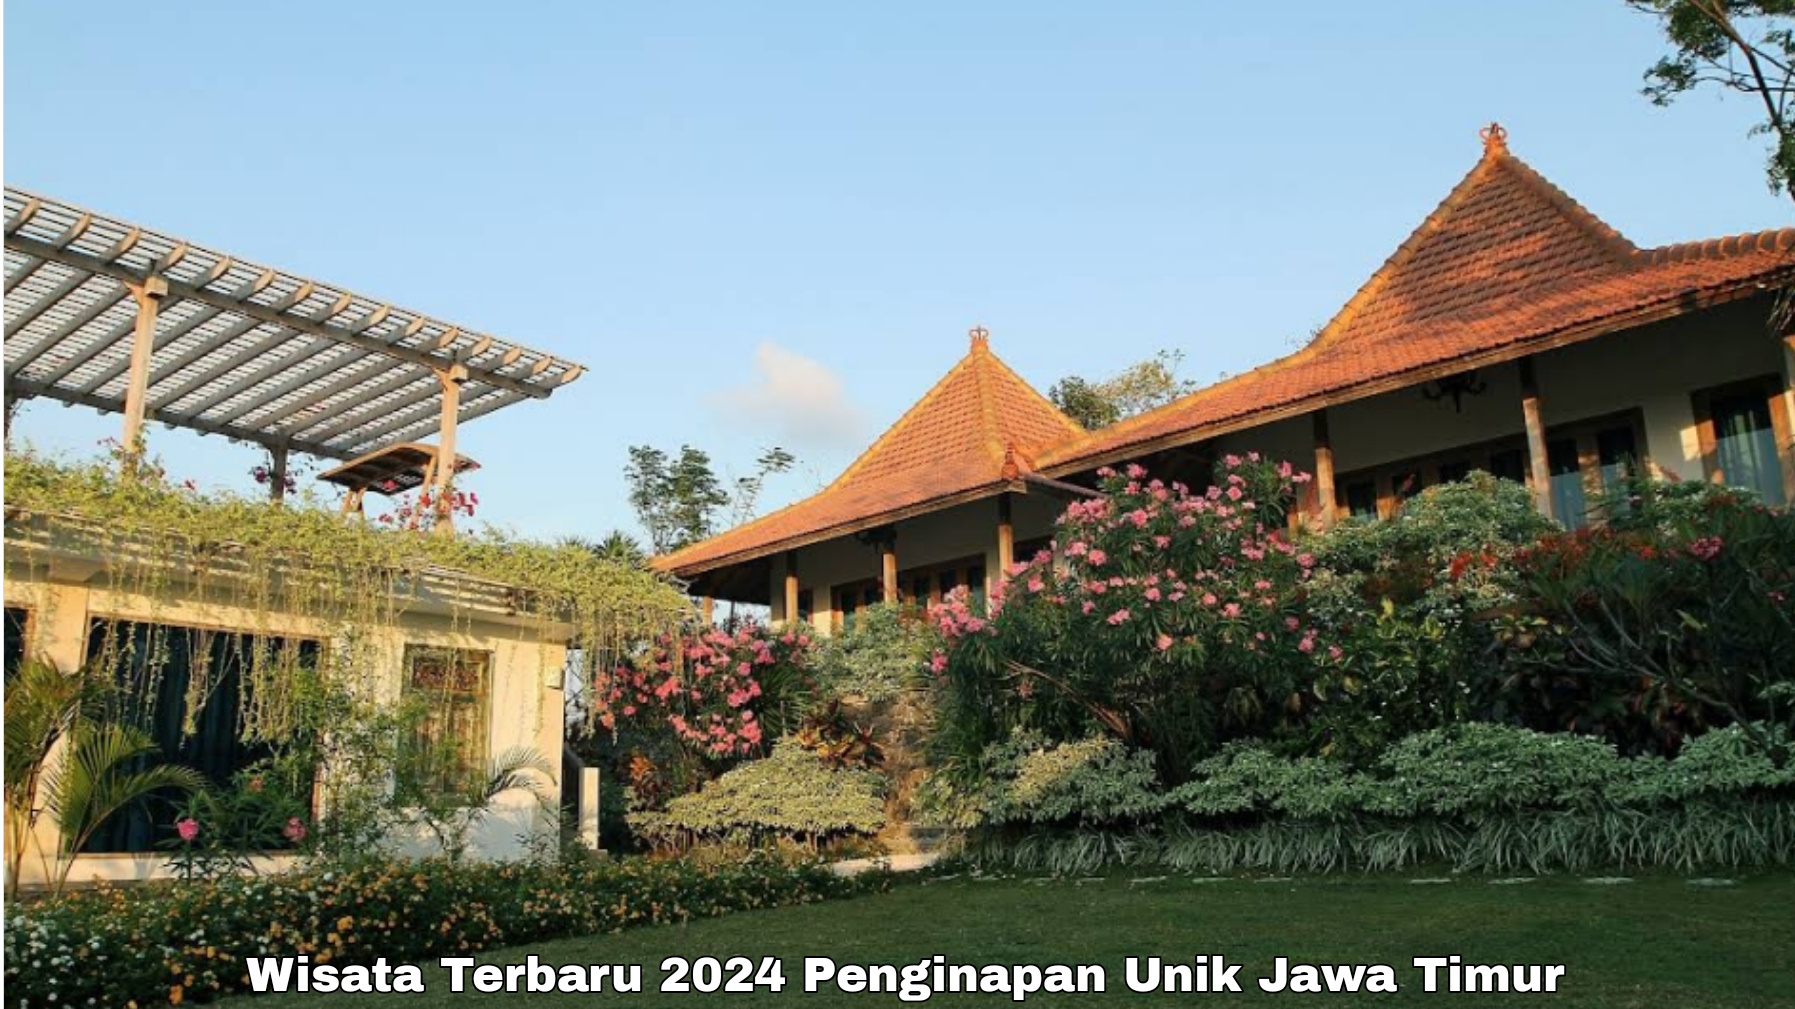 Wisata Terbaru 2024: Rekomendasi Staycation di Penginapan Unik Jawa Timur